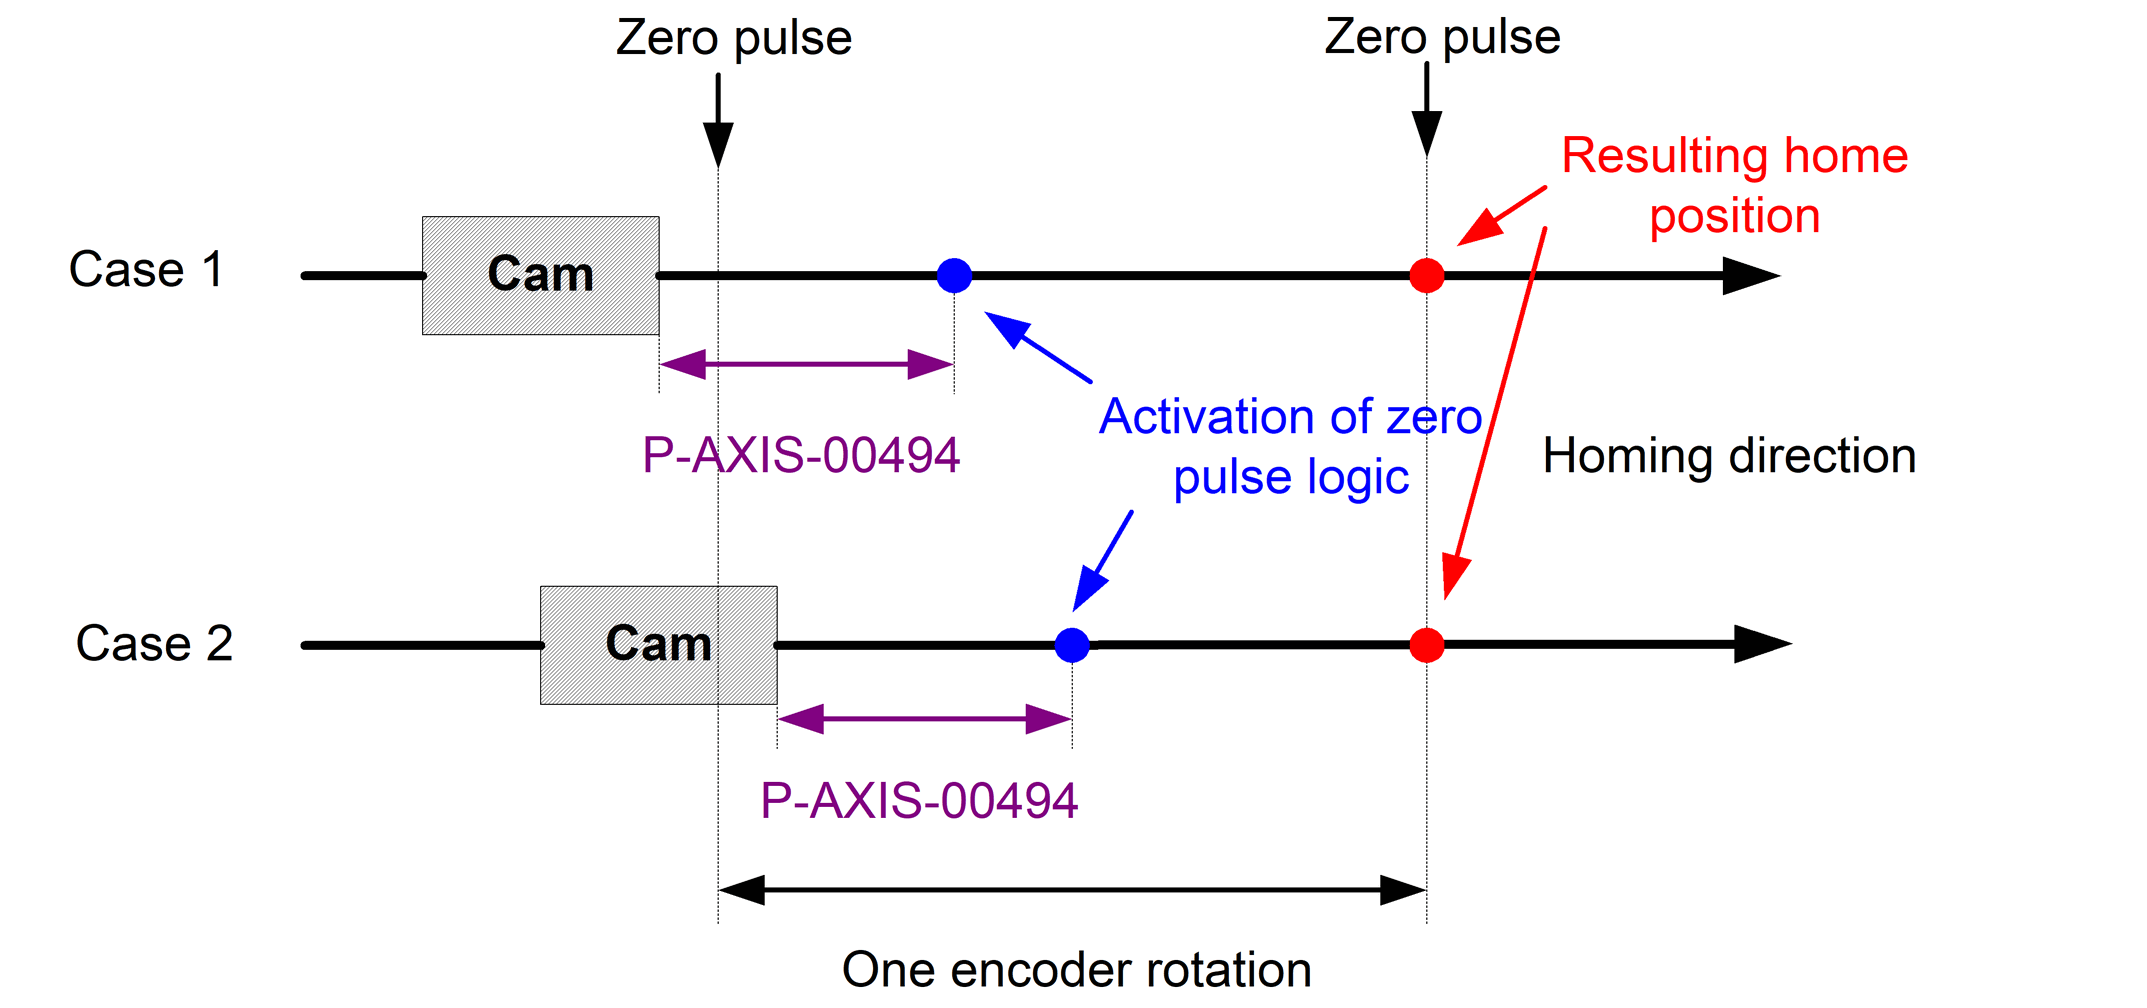 Activation time shift of zero pulse logic ensures identical zero pulse